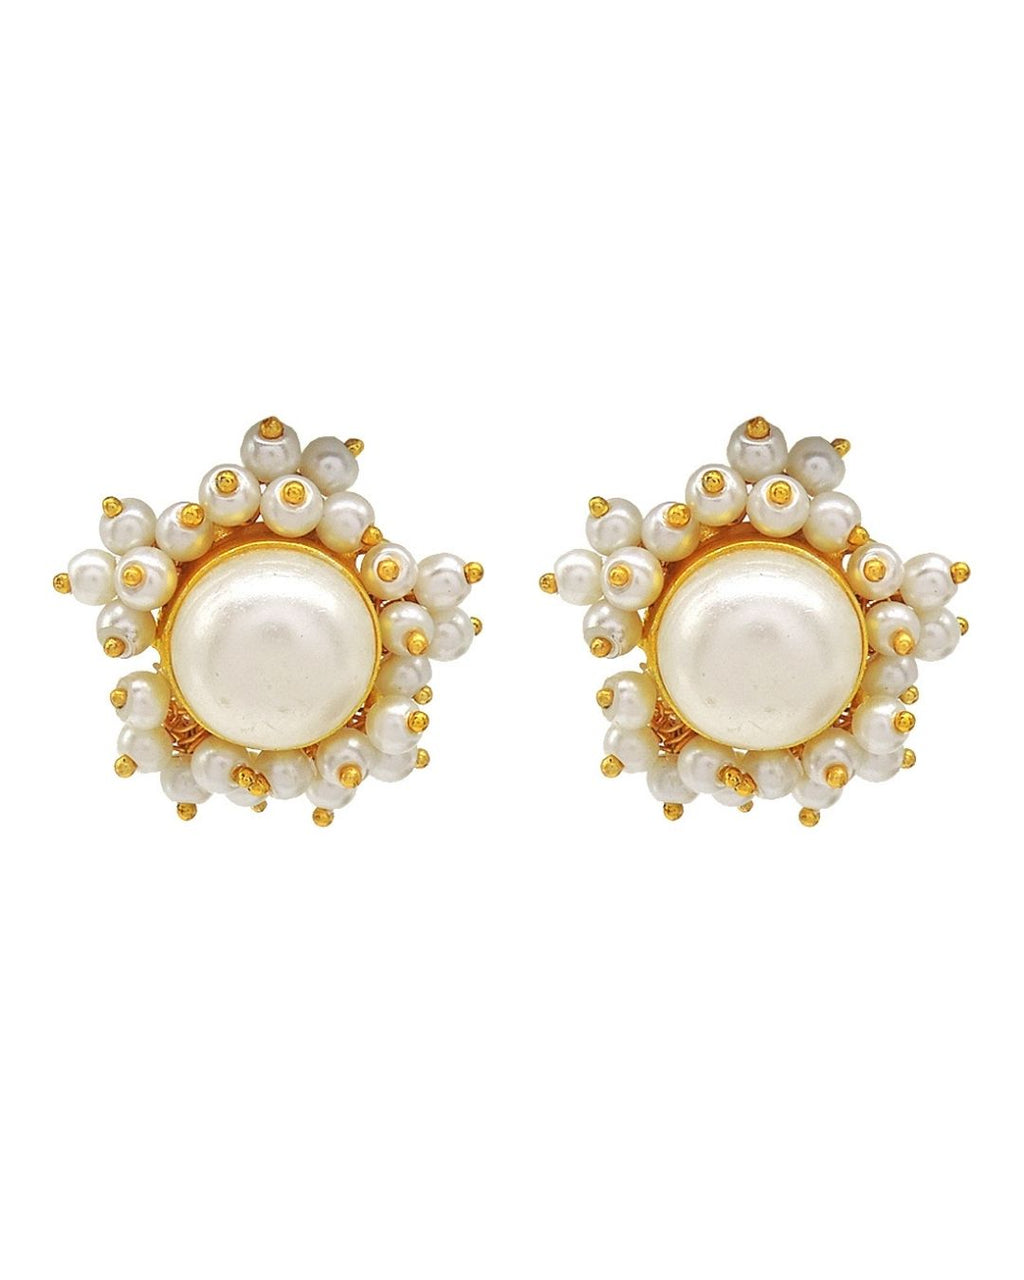 Pearl Bloom Earrings - Earrings - Handcrafted Jewellery - Made in India - Dubai Jewellery, Fashion & Lifestyle - Dori